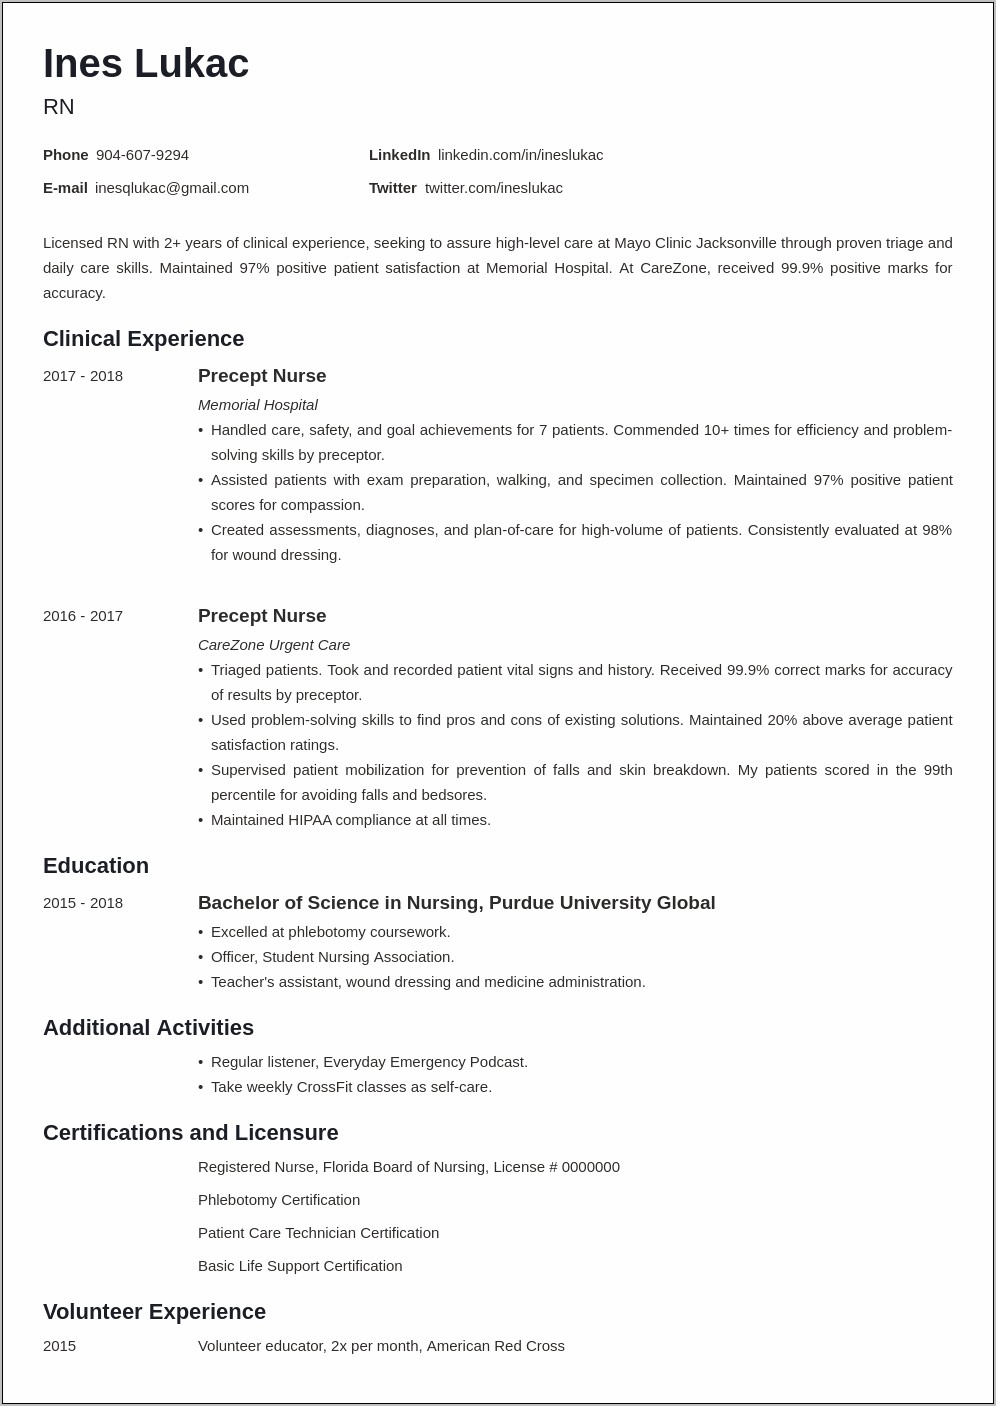 Sample Resume For Applying To Nursing School